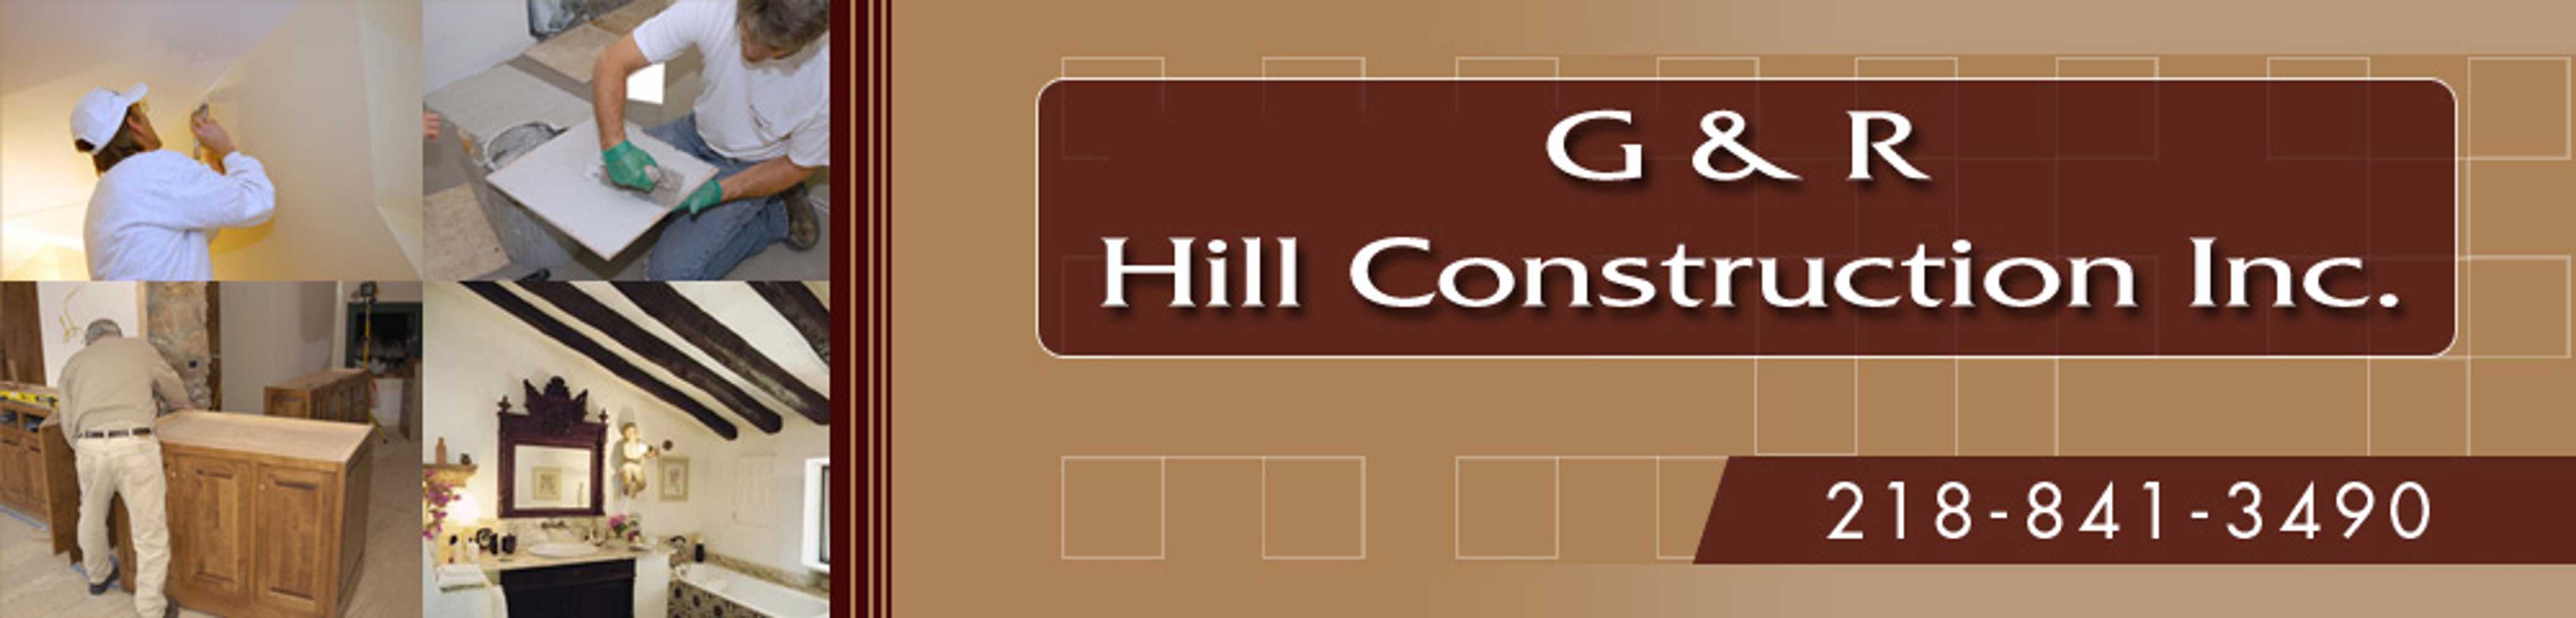 G & R Hill Construction Inc